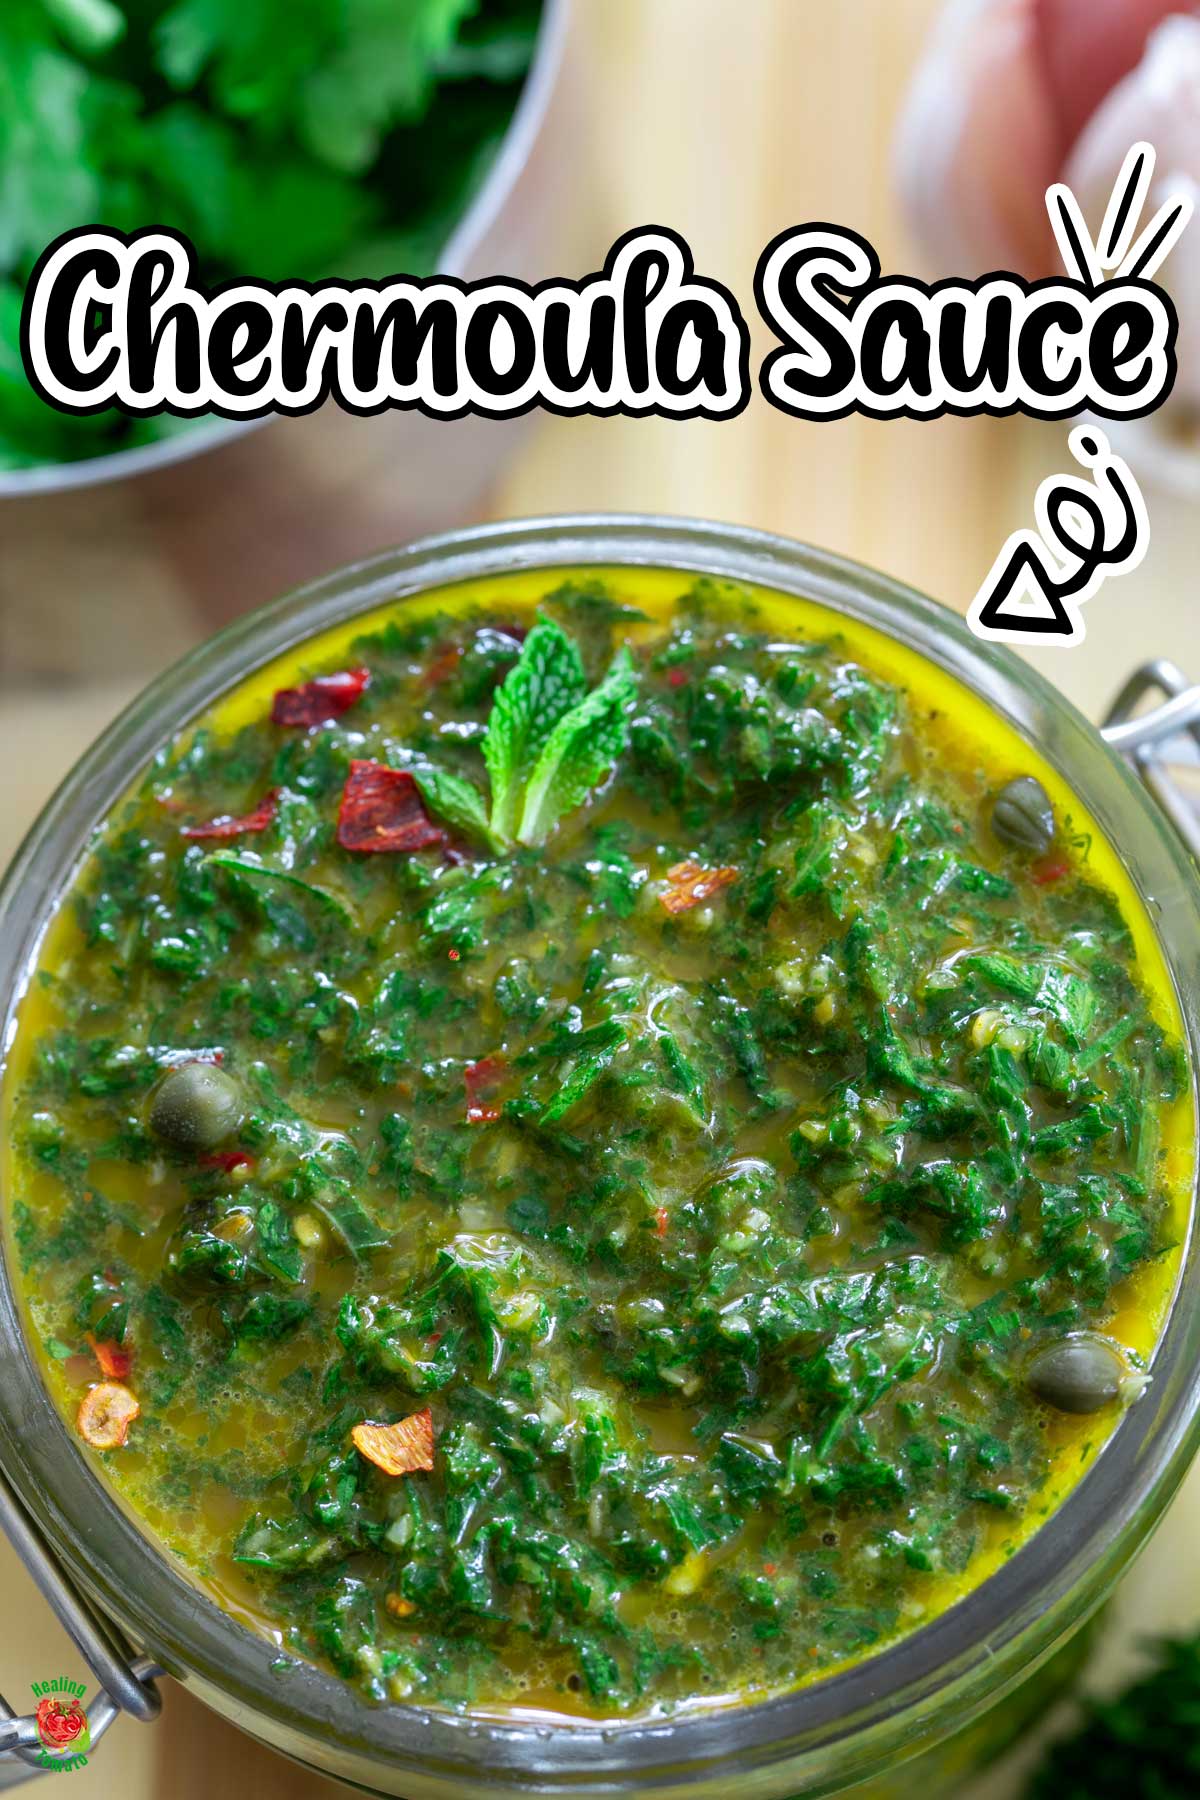 How to Make Chermoula Sauce